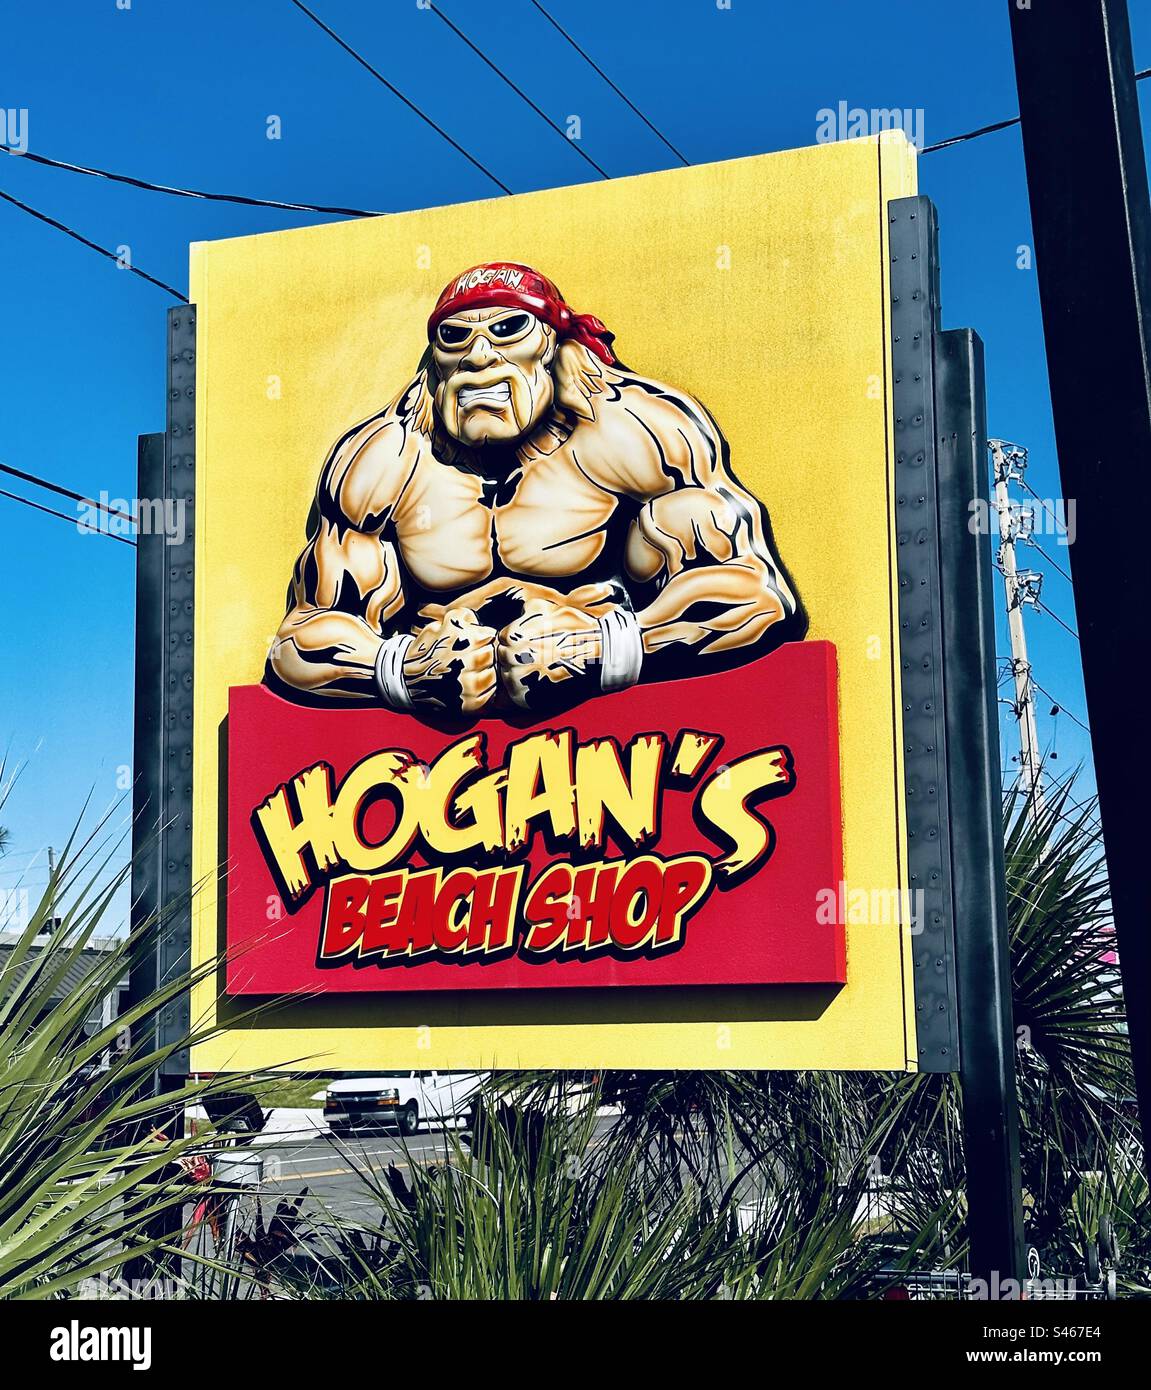 Hogans Beach Shop Sign International Drive Orlando Florida Stock Photo ...